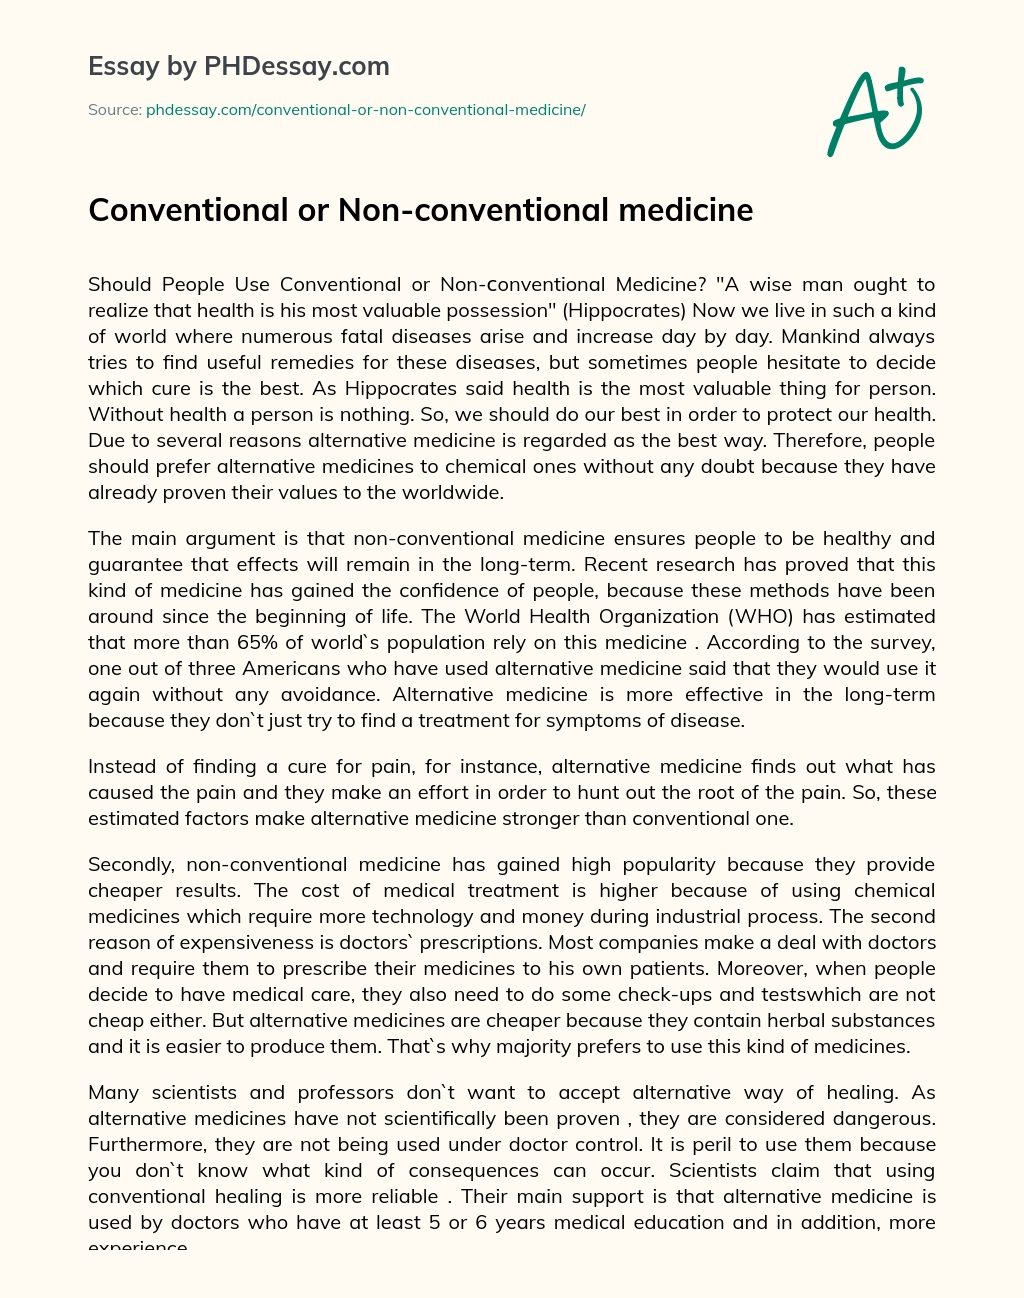 Conventional or Non-conventional medicine essay